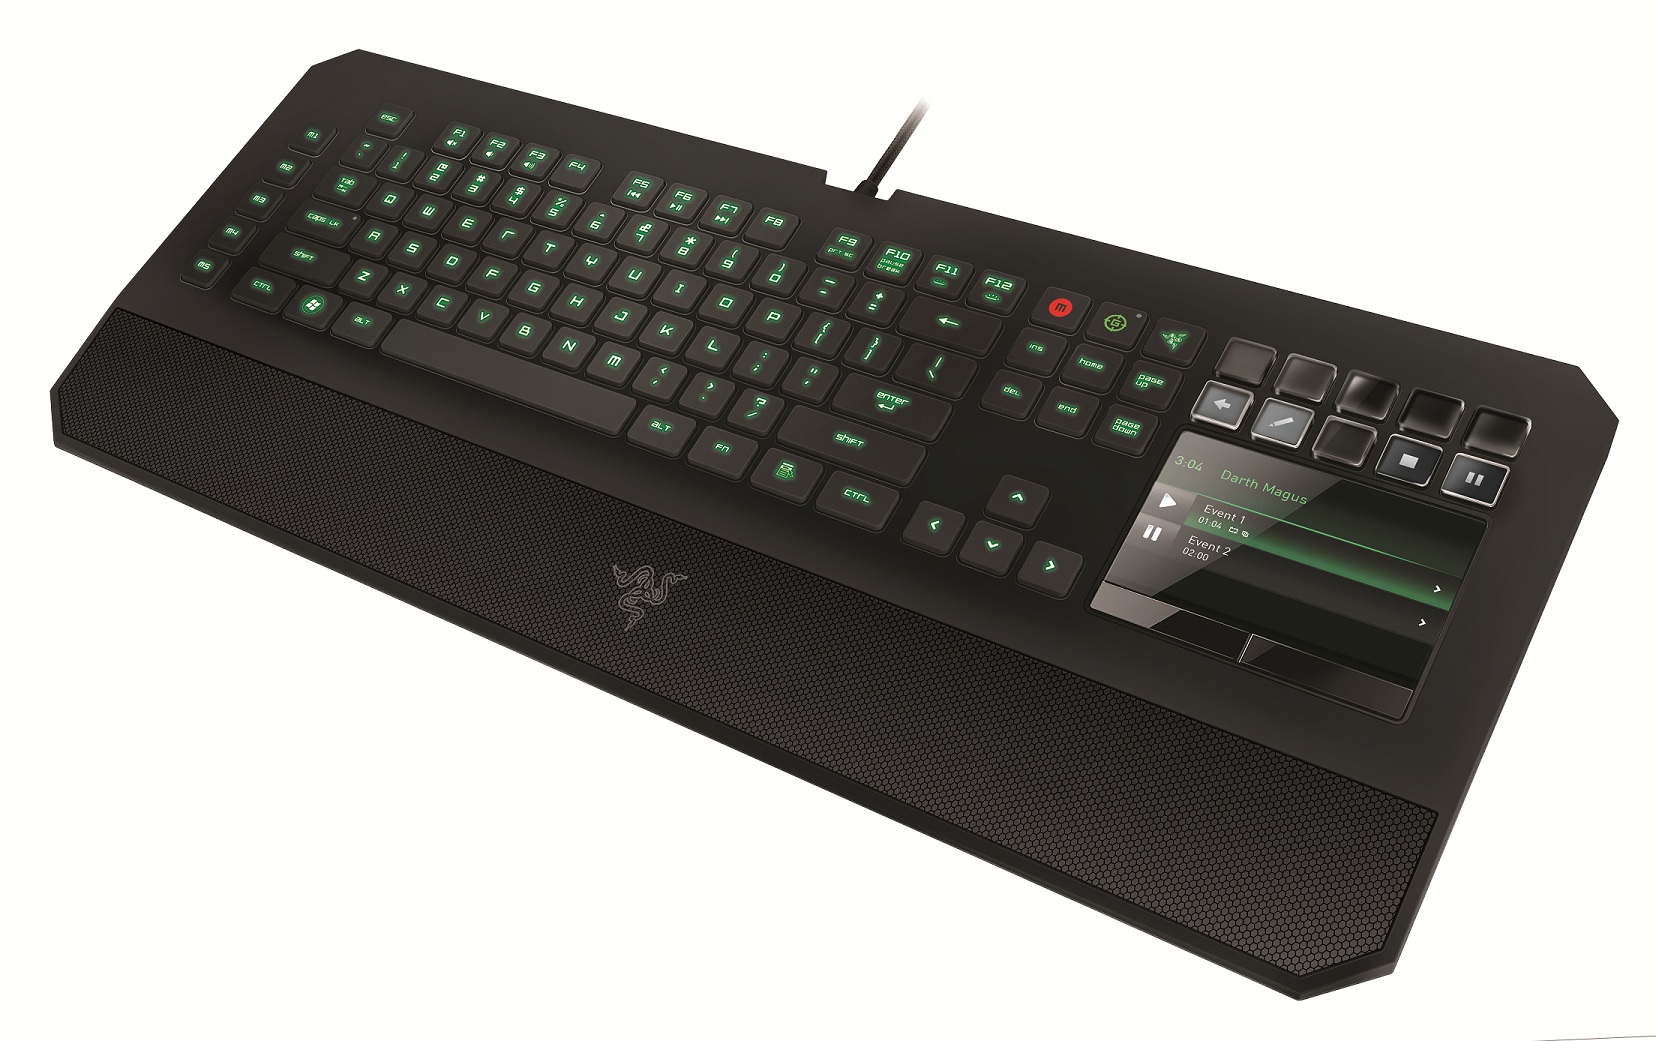 Razer Announces Release of the DeathStalker Ultimate, The World’s Smartest Keyboard